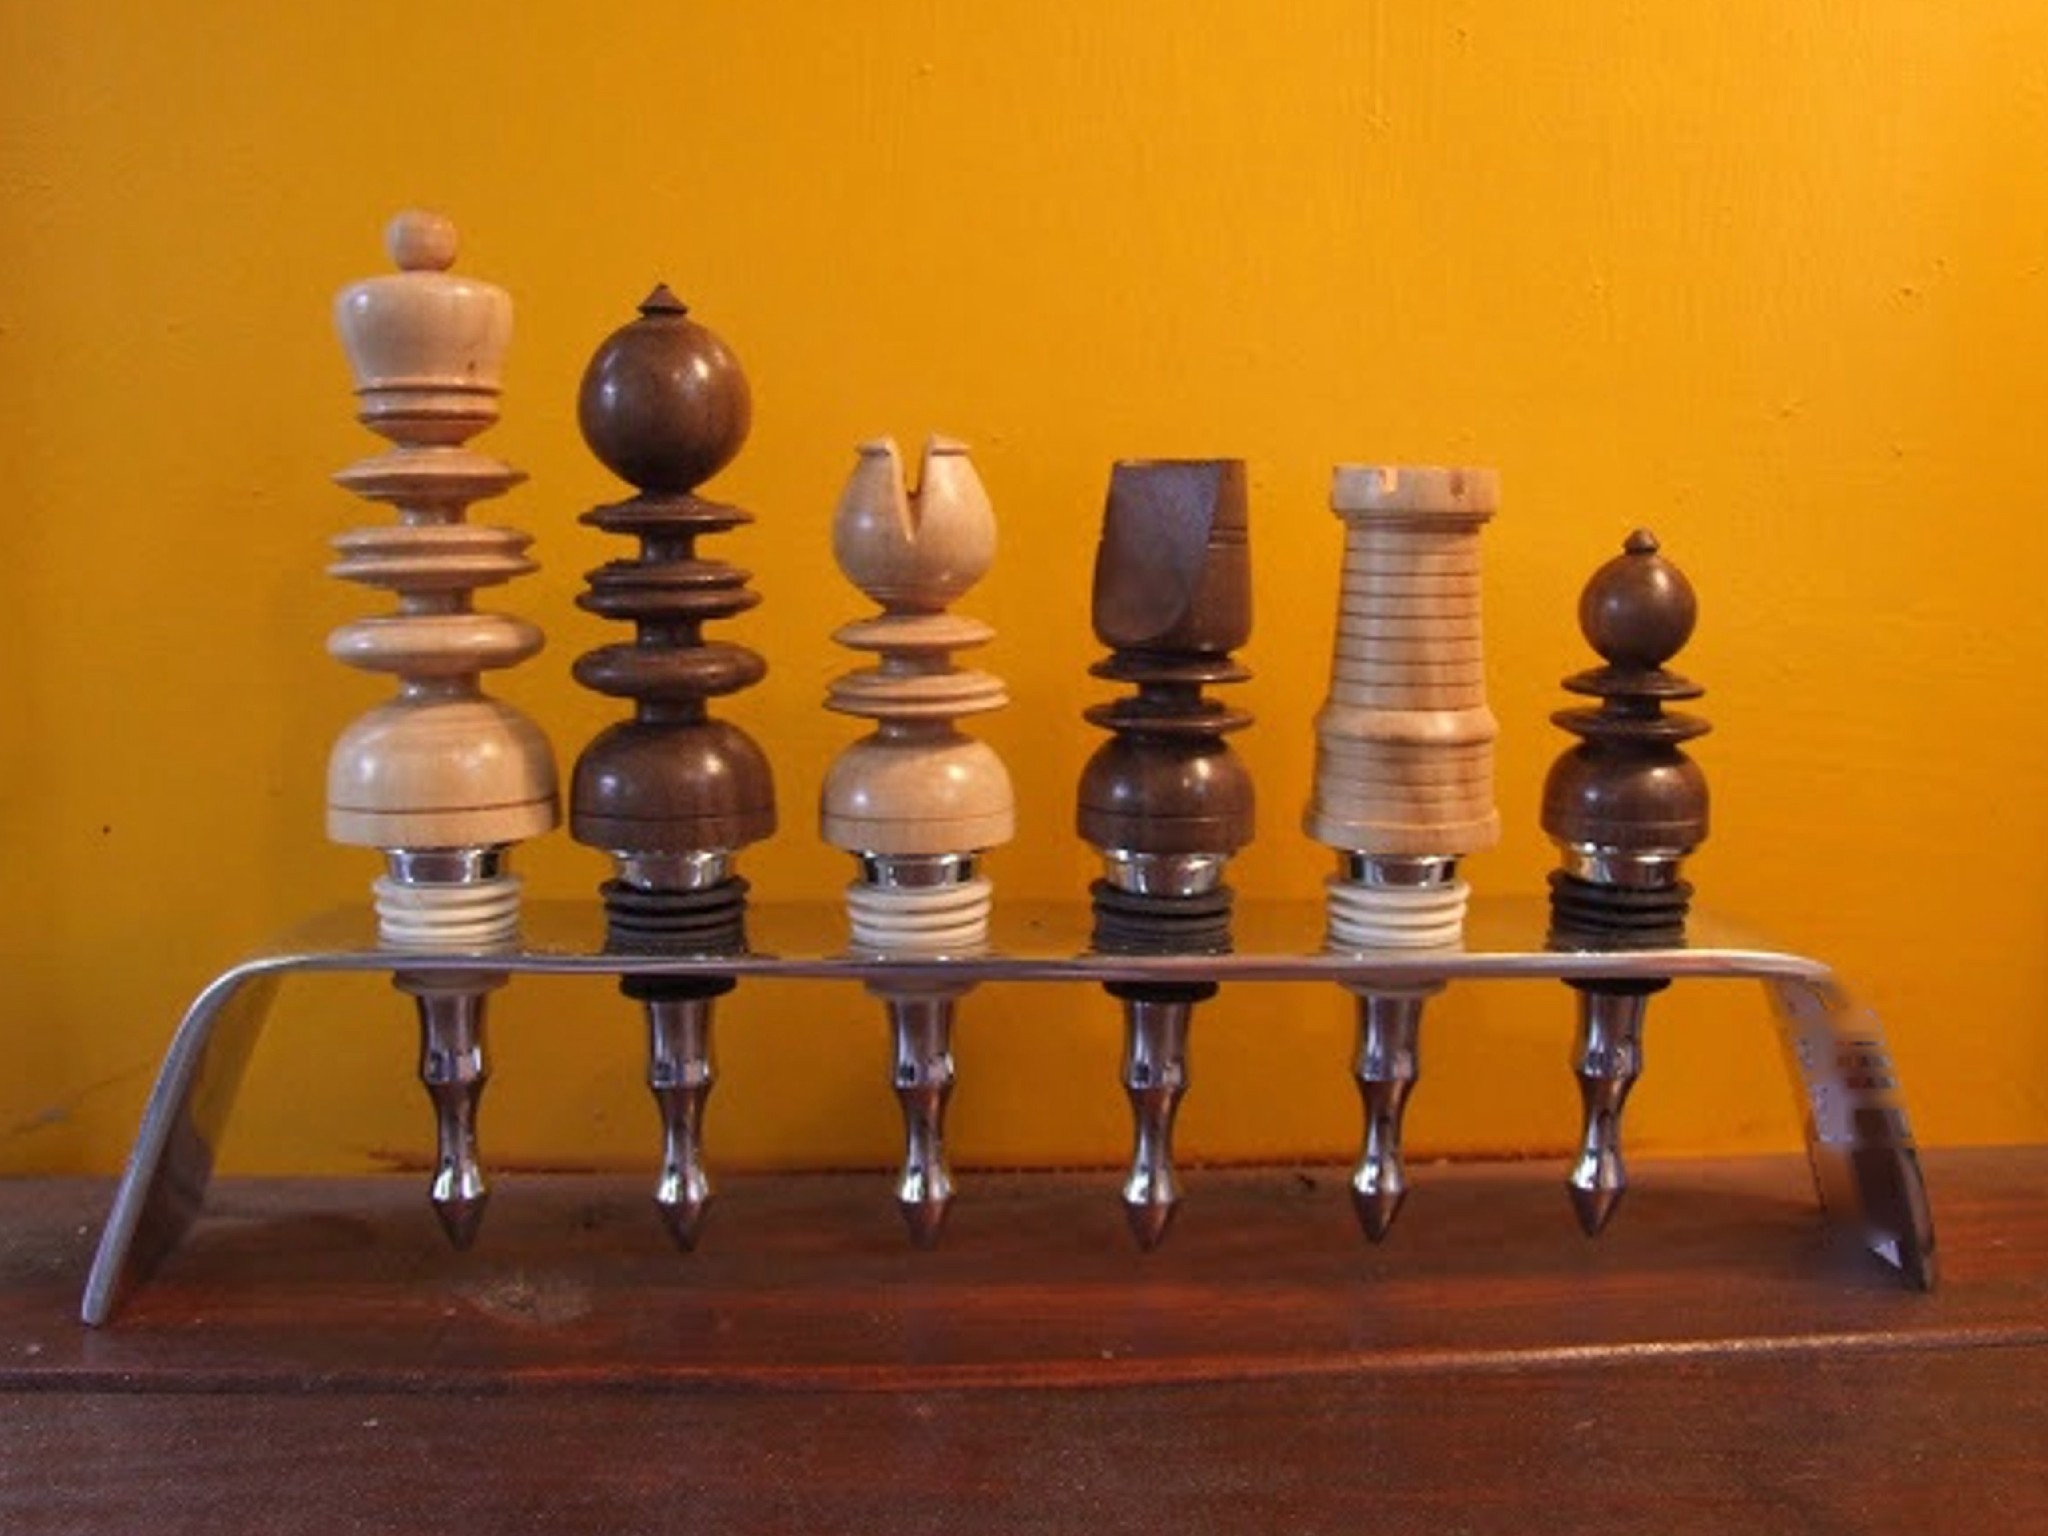 St George style chess set / wine bottle stopper set